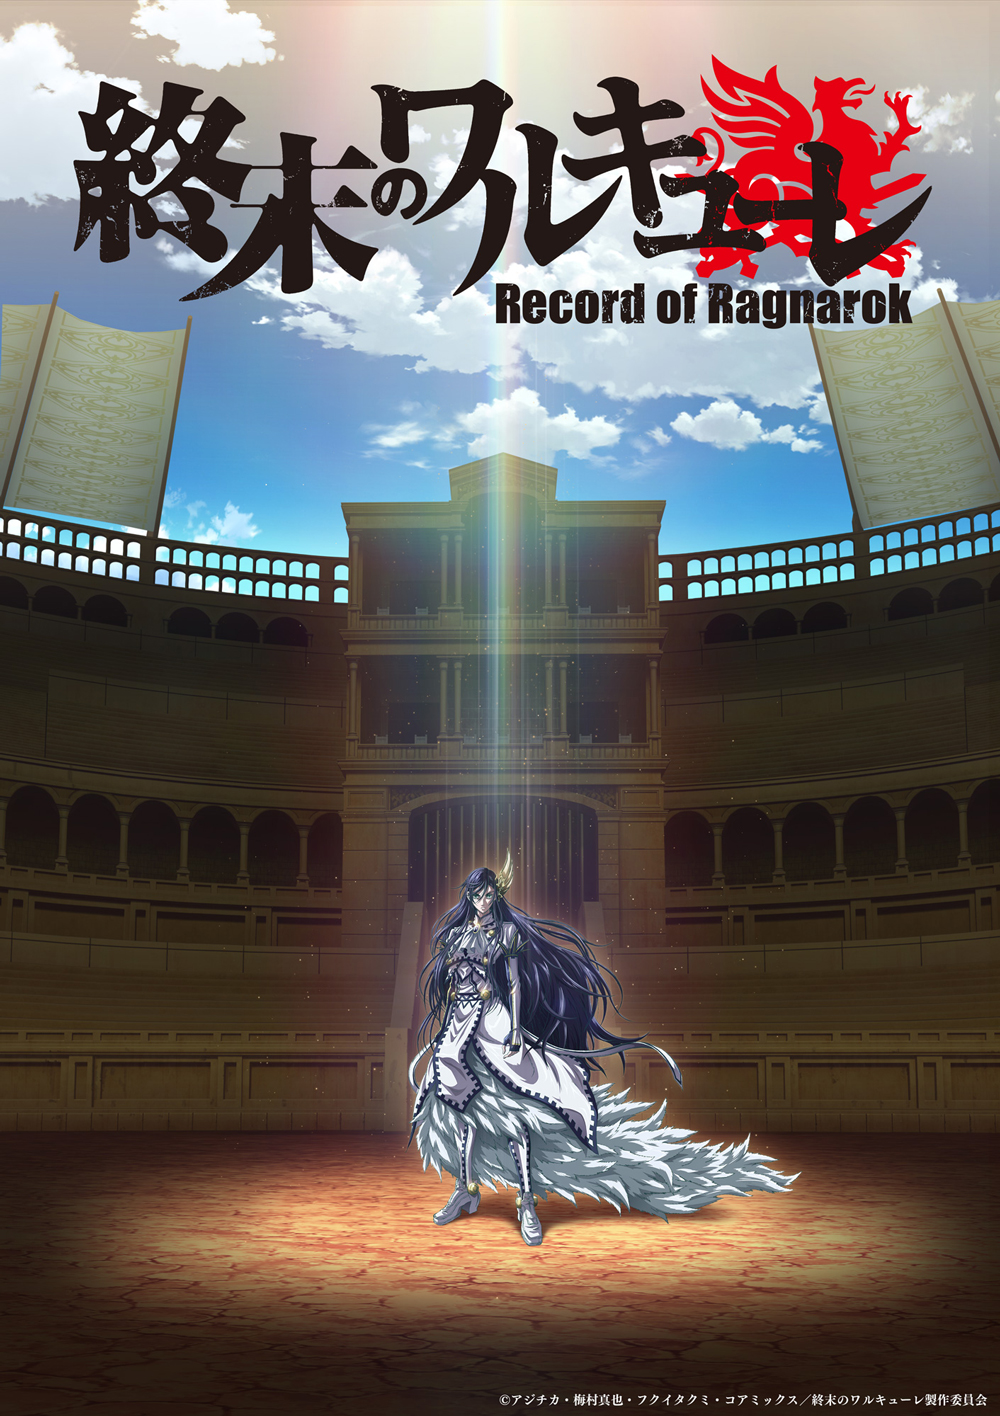 Registro de Ragnarok Anime: Release Info